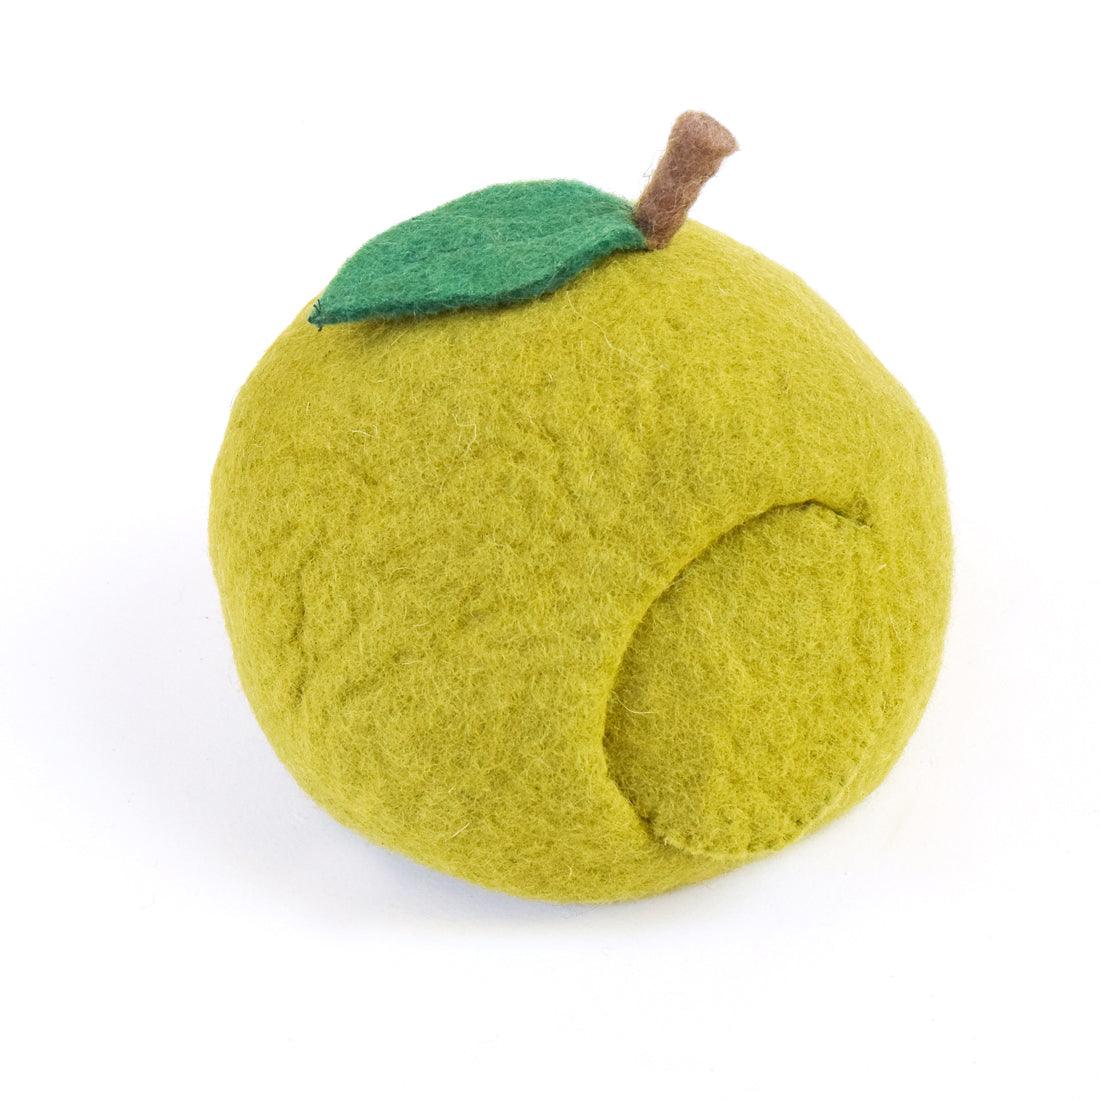 Felt Green Apple House with Hedgehog Toy - Tara Treasures